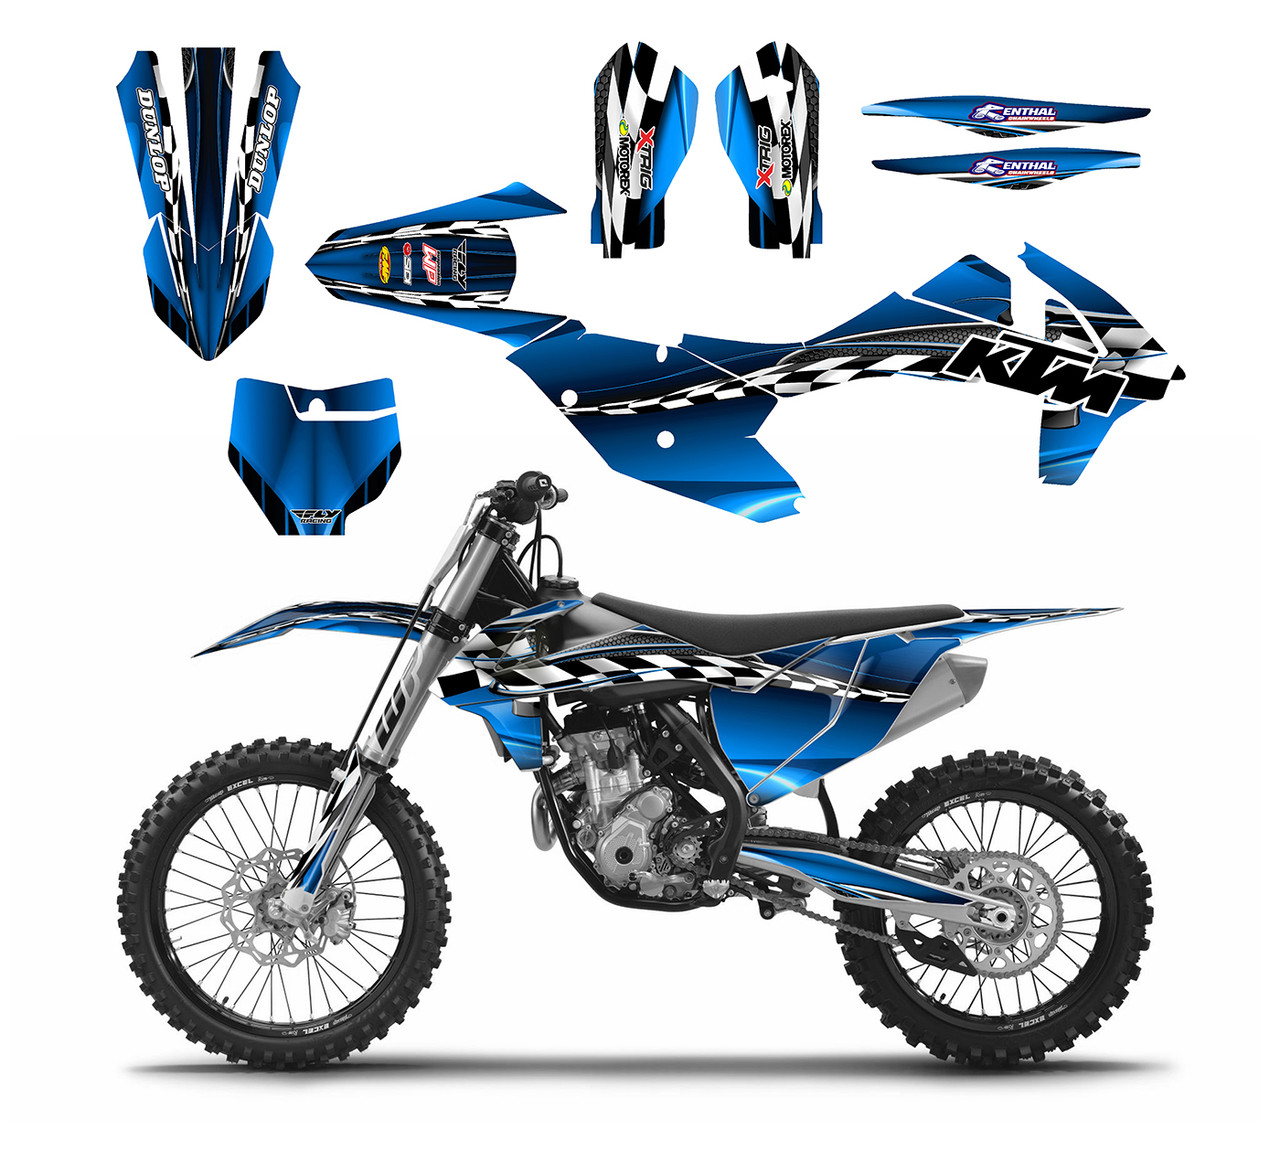 Yamaha Banshee graphics full coverage decal kit free custom service #2500 blue 